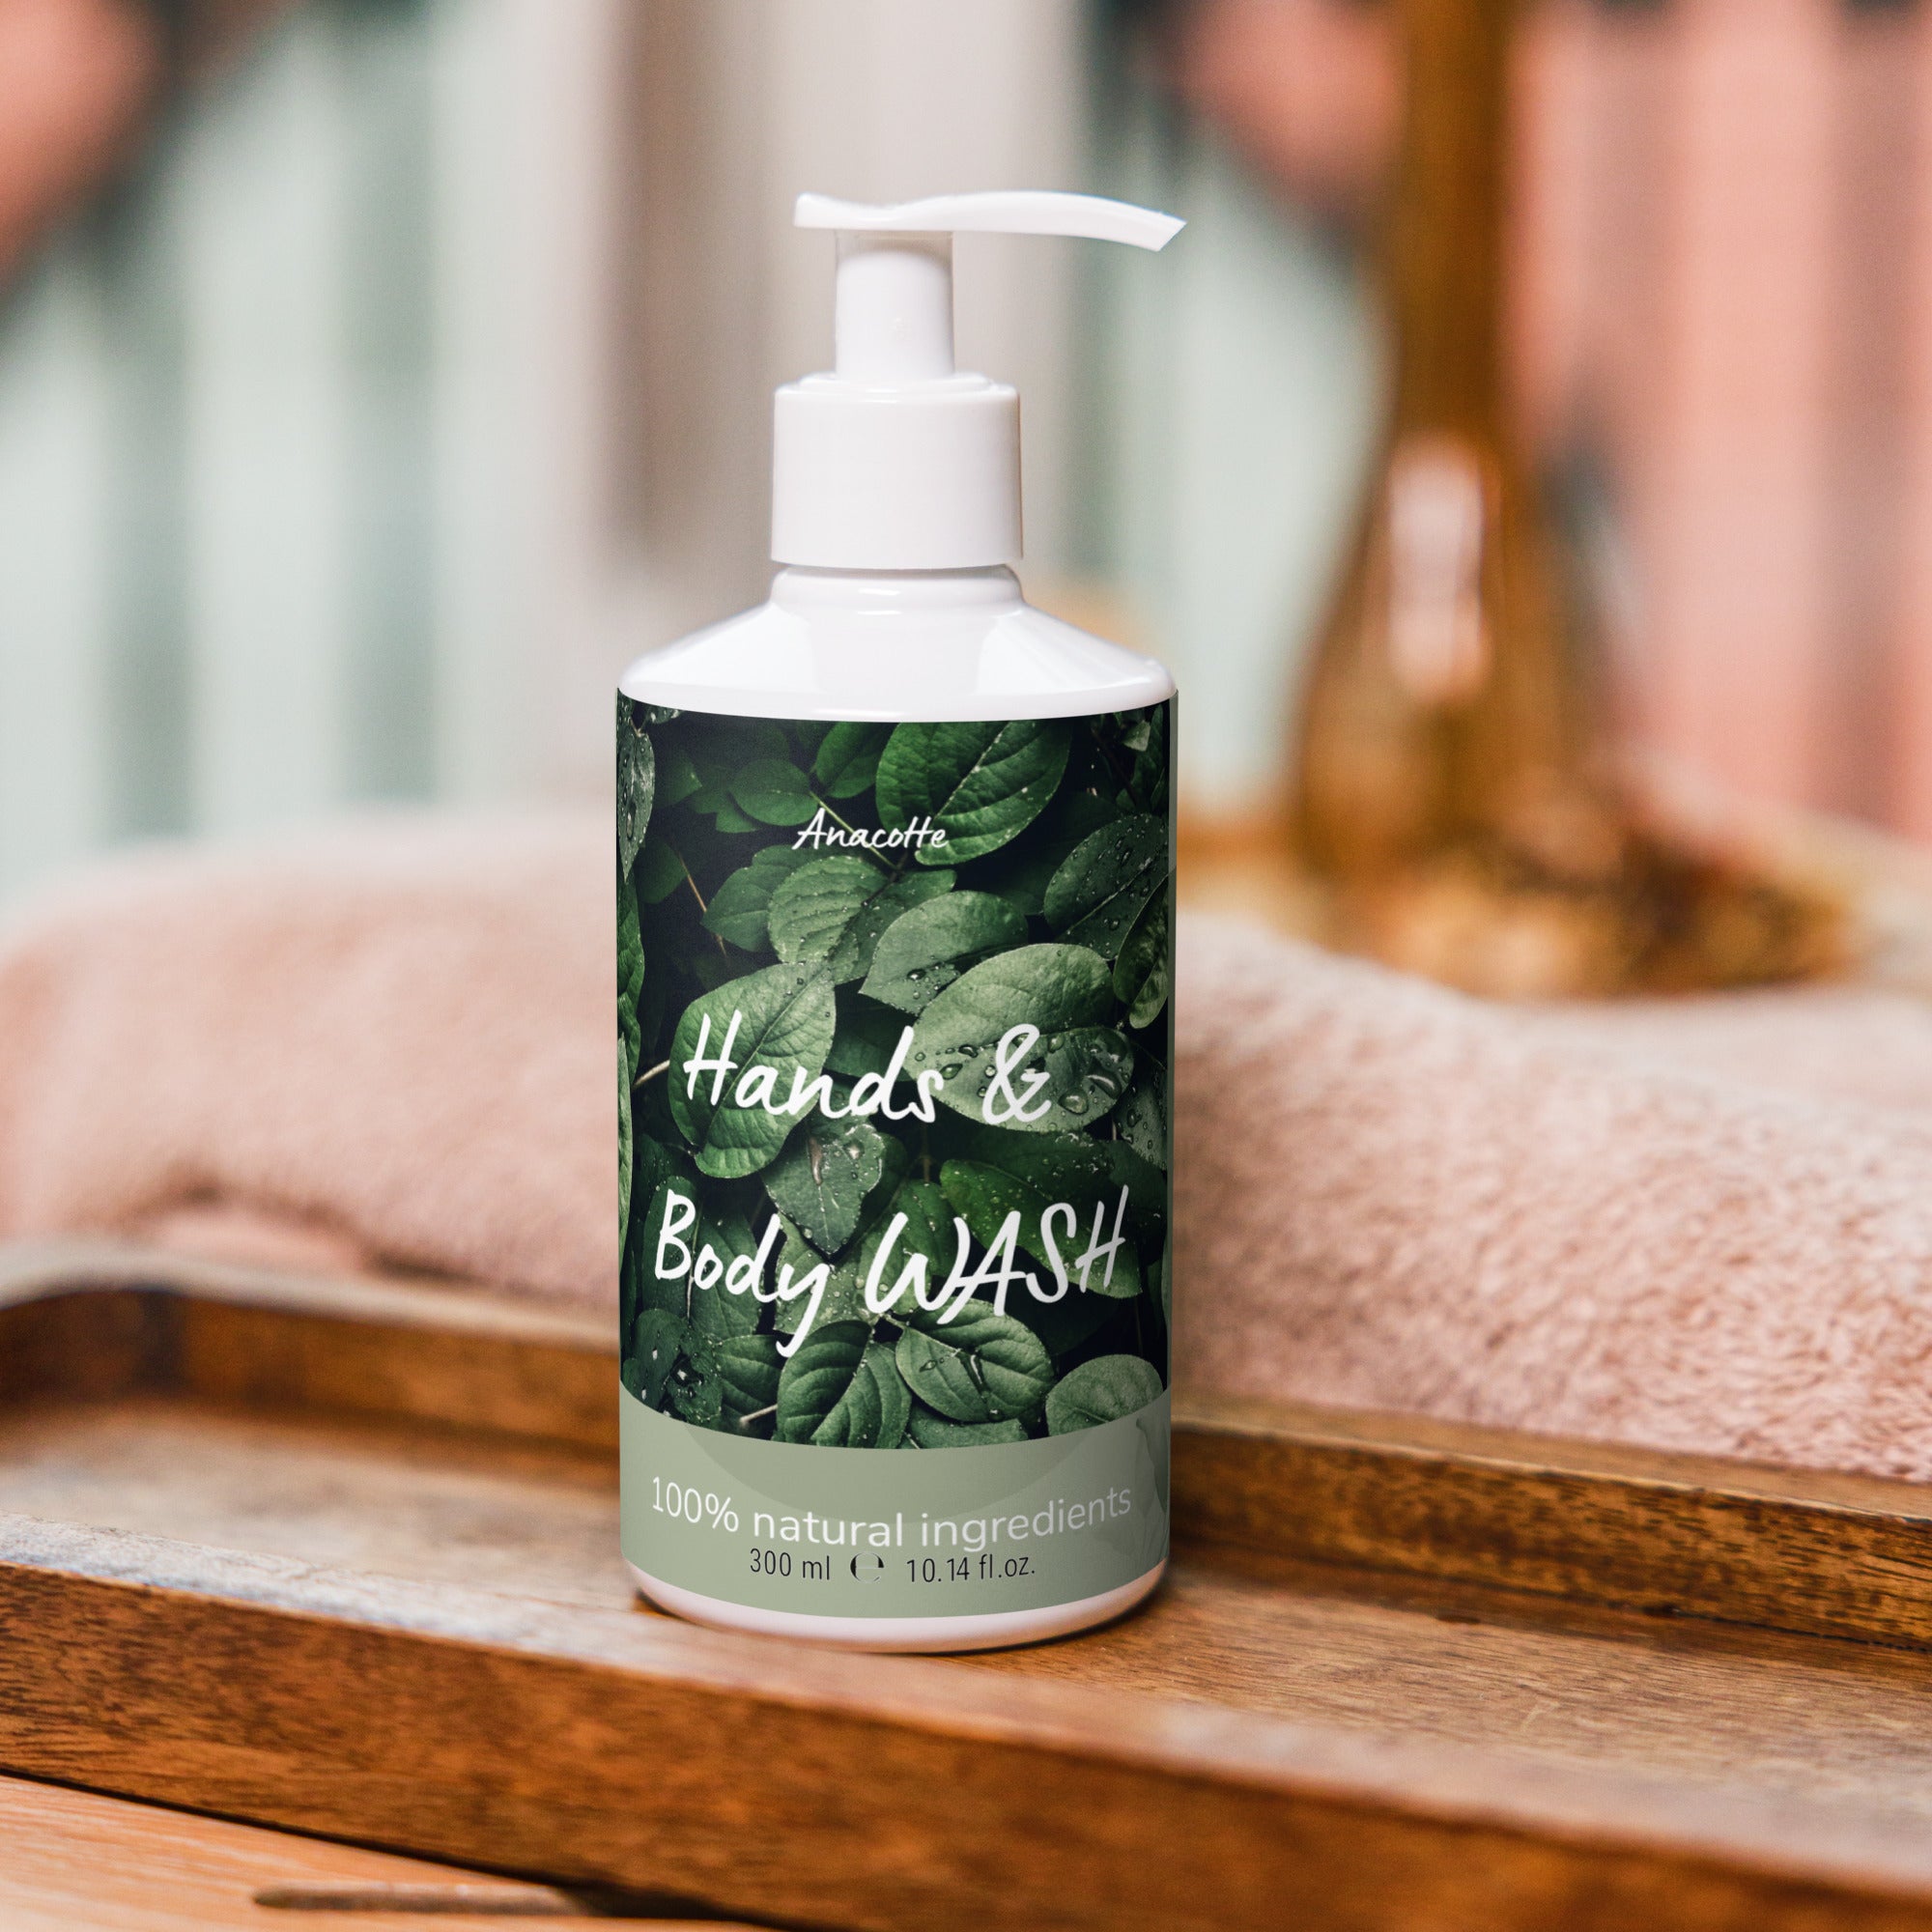 Anacotte Refreshing Hand & Body Wash: Feel the Clean, Fresh Feeling